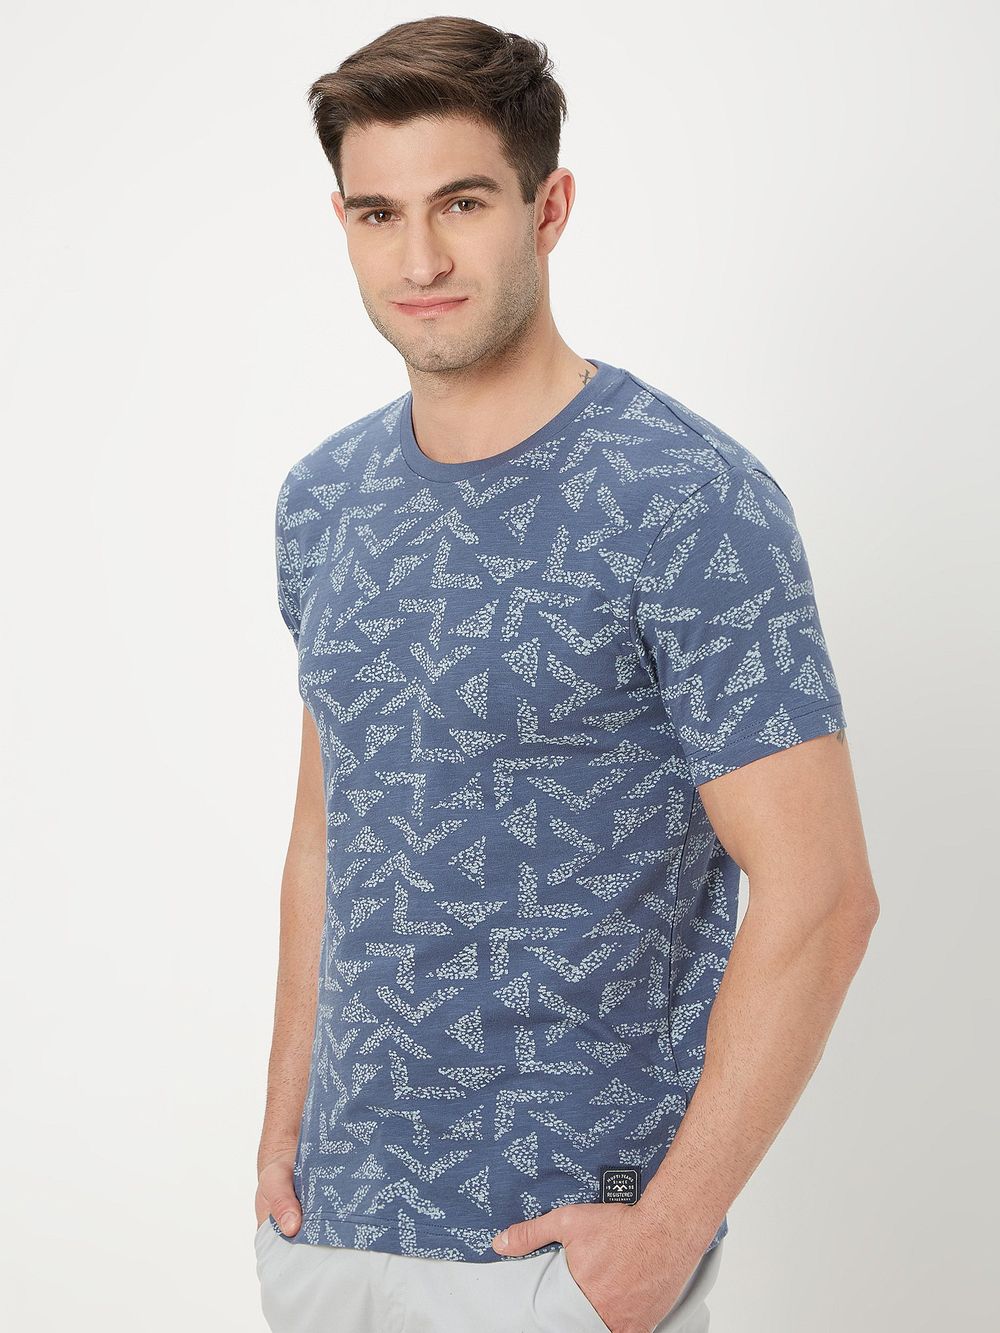 Grey & Light Grey Geometric Print T-Shirt